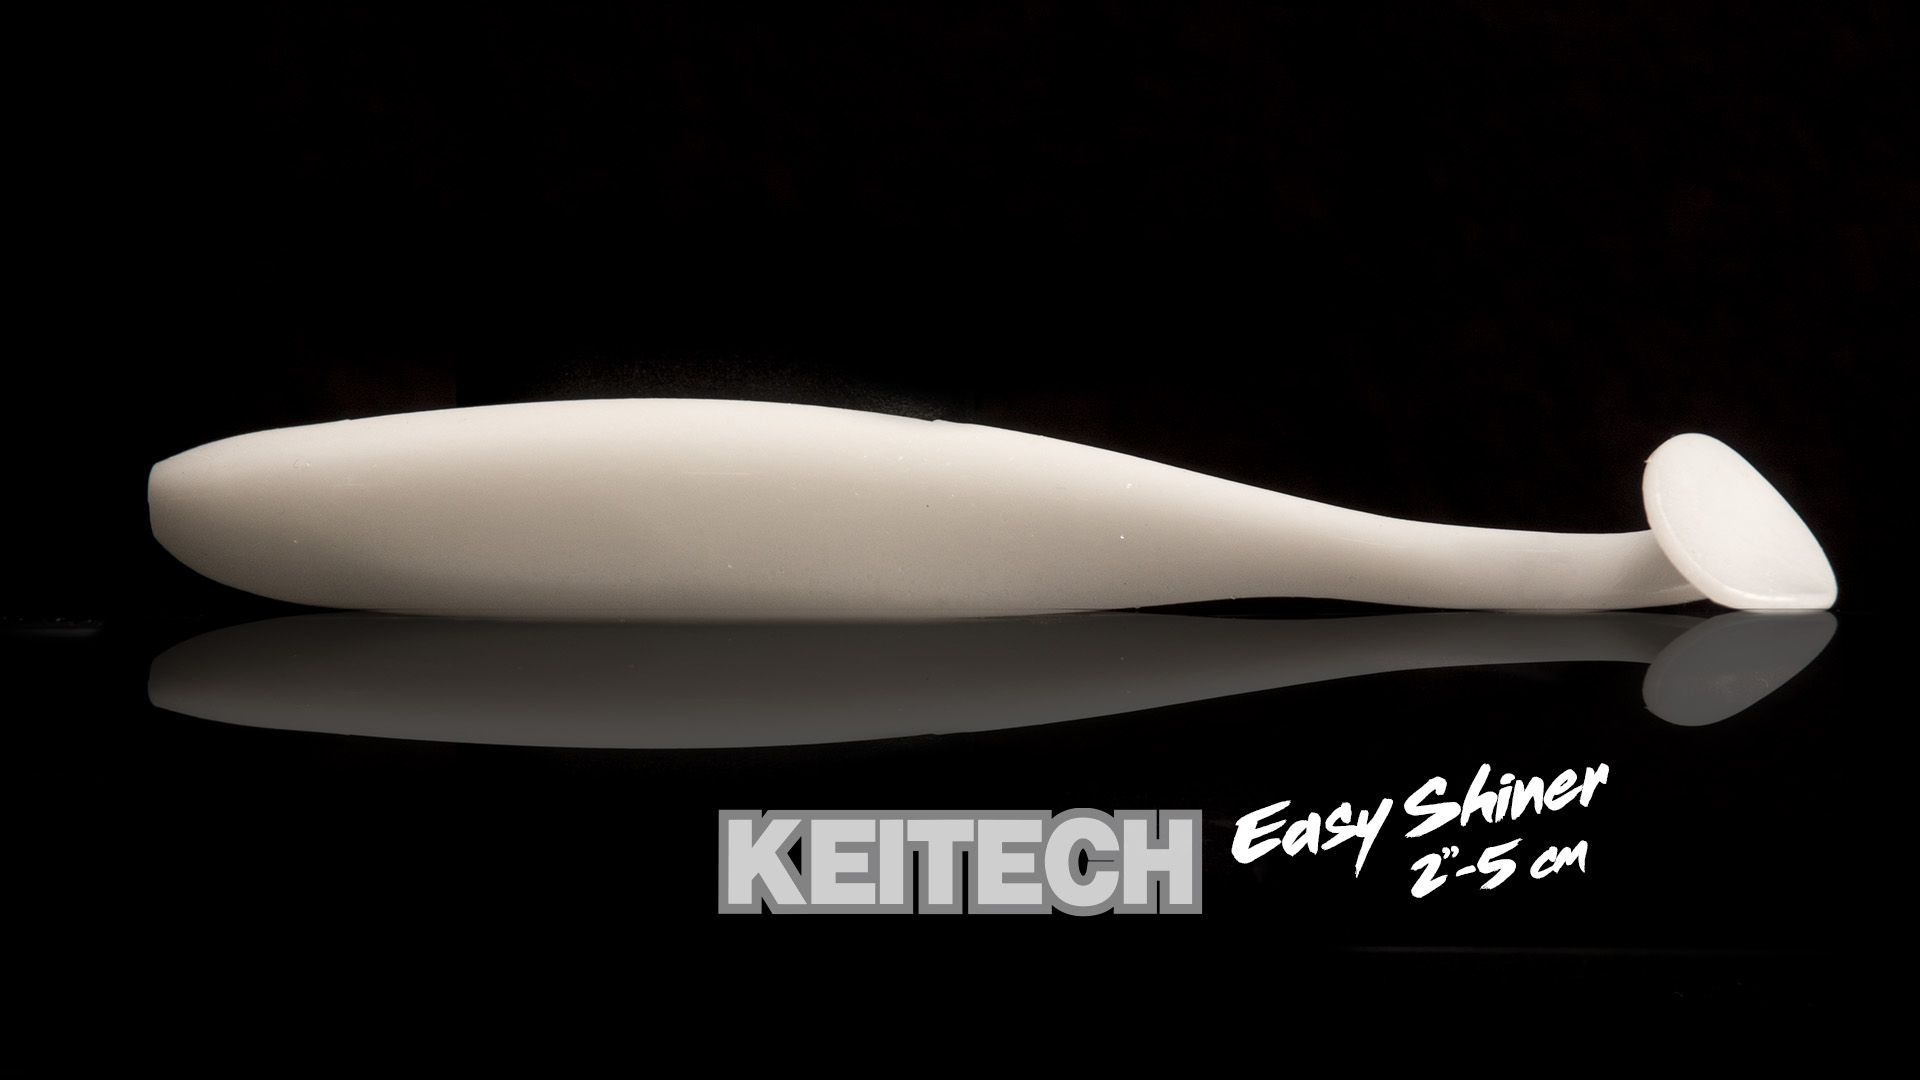 Keitech-Easy-Shiner-20-50-cm